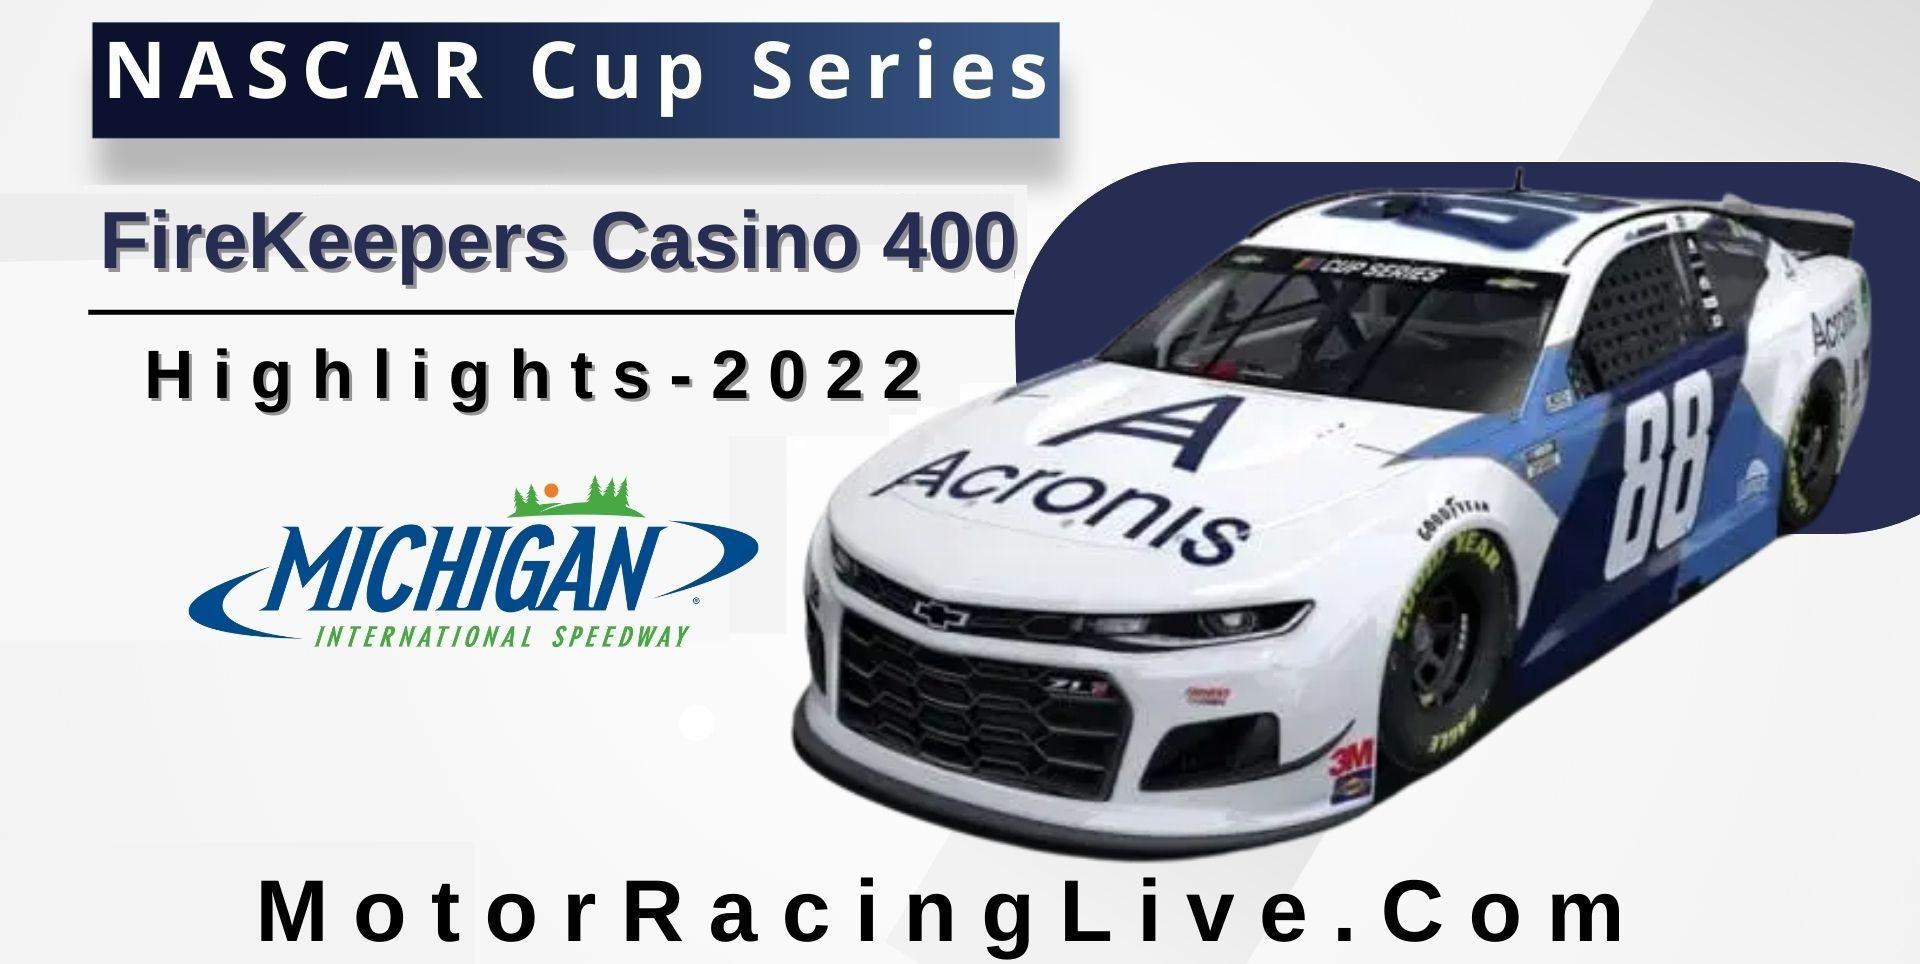 FireKeepers Casino 400 Highlights 2022 NASCAR Cup